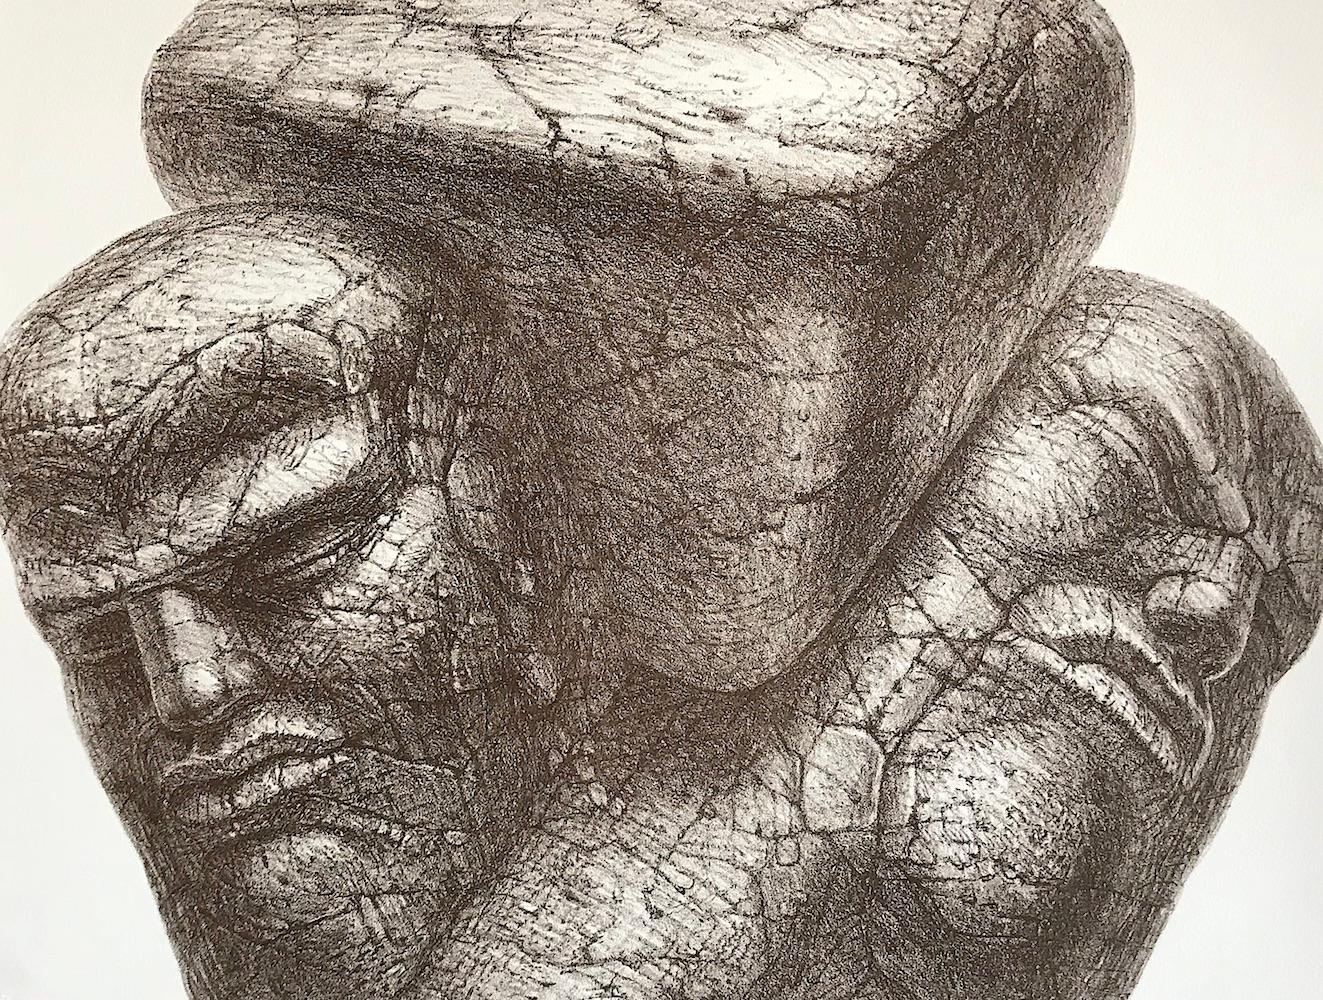 WEDGE Hand Drawn Lithograph, Stone Heads Two Men Under Pressure, Sci-Fi Portrait - Print by De Es Schwertberger